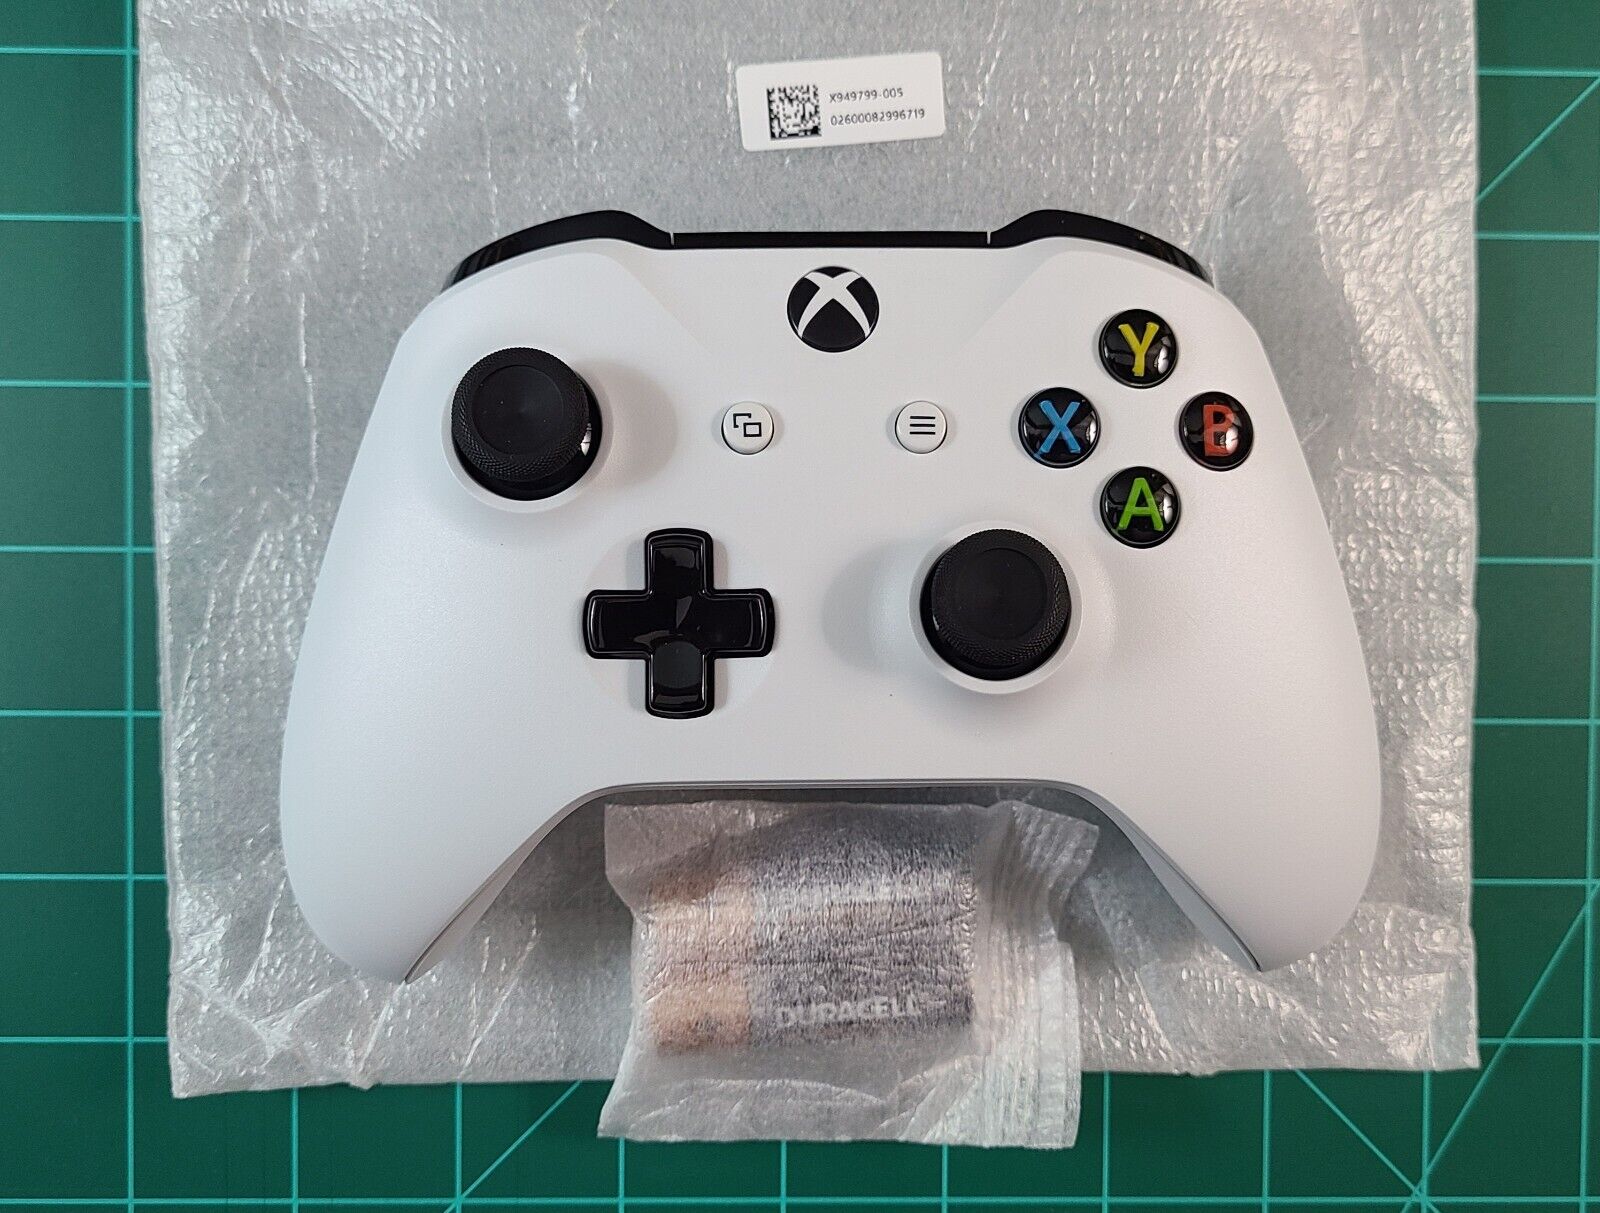 Microsoft Xbox One S Wireless Controller White for sale online | eBay